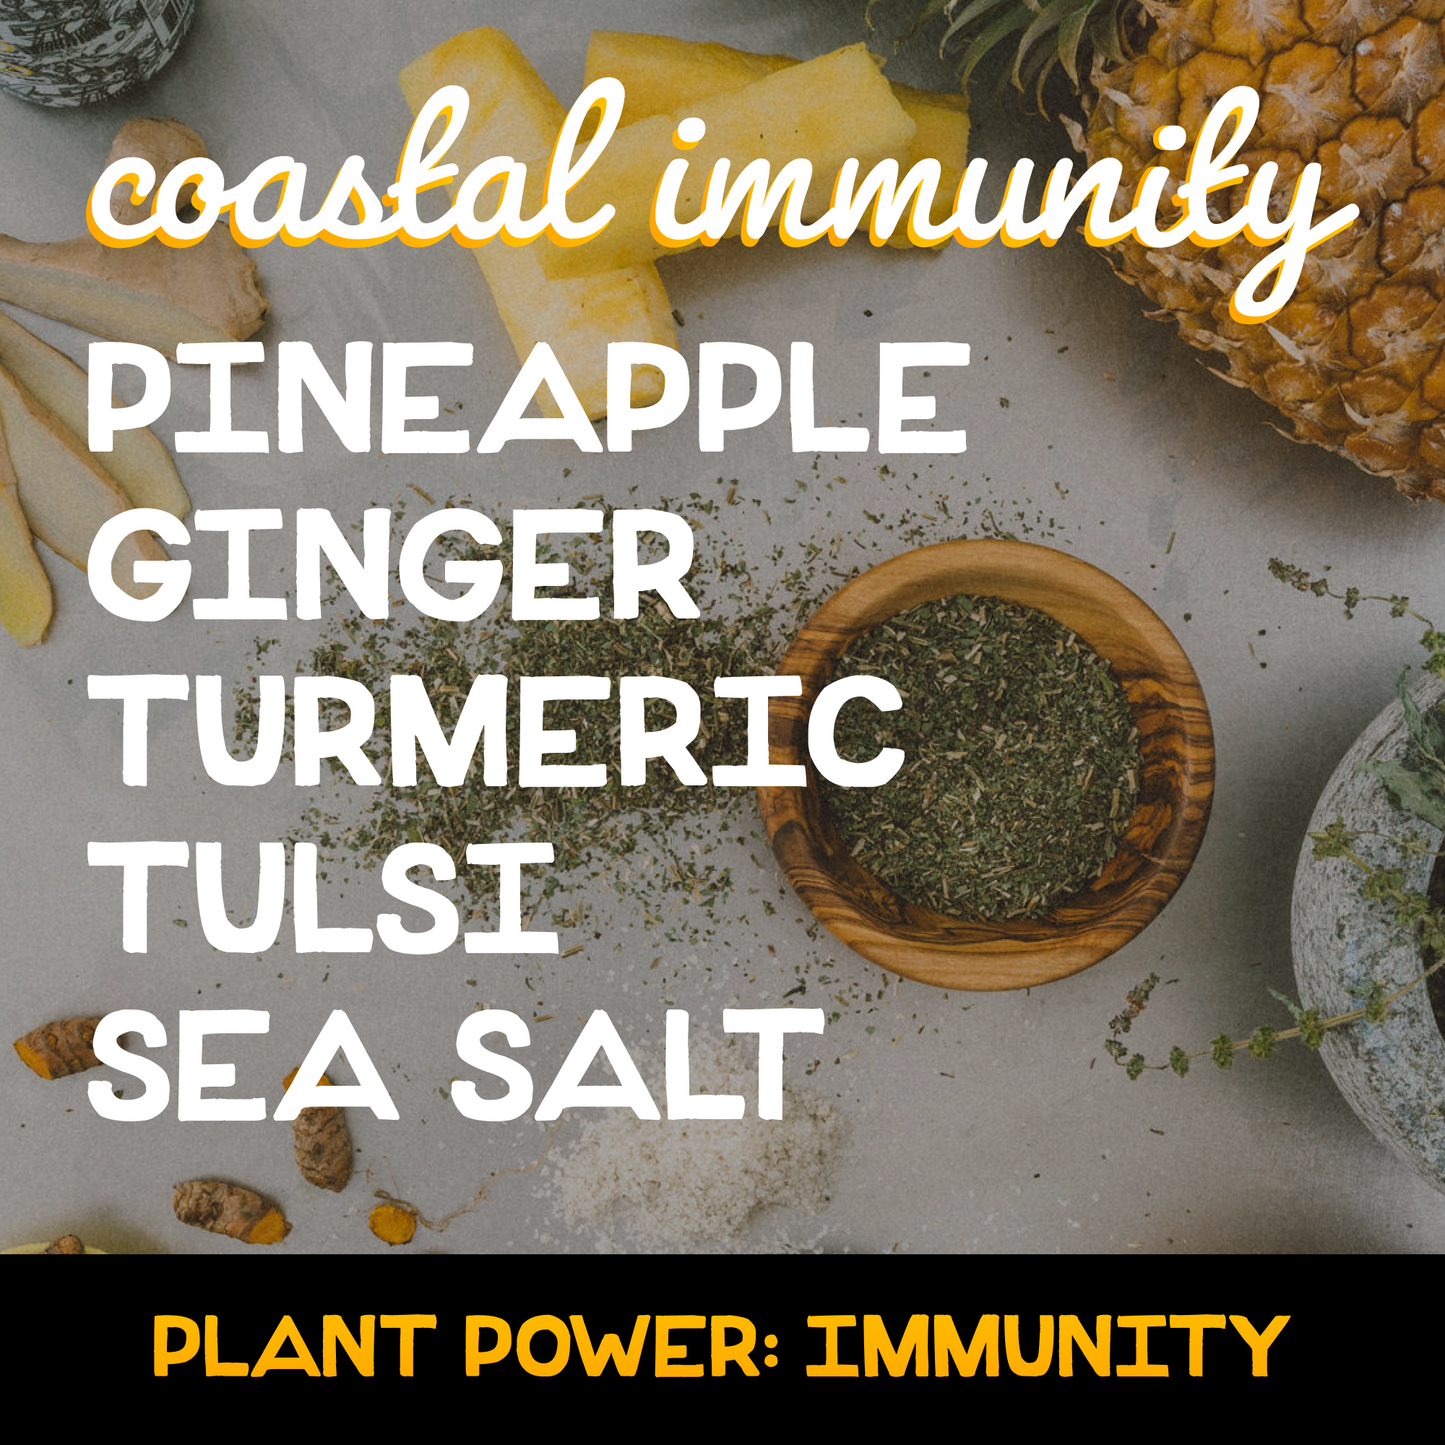 Coastal Immunity ingredients